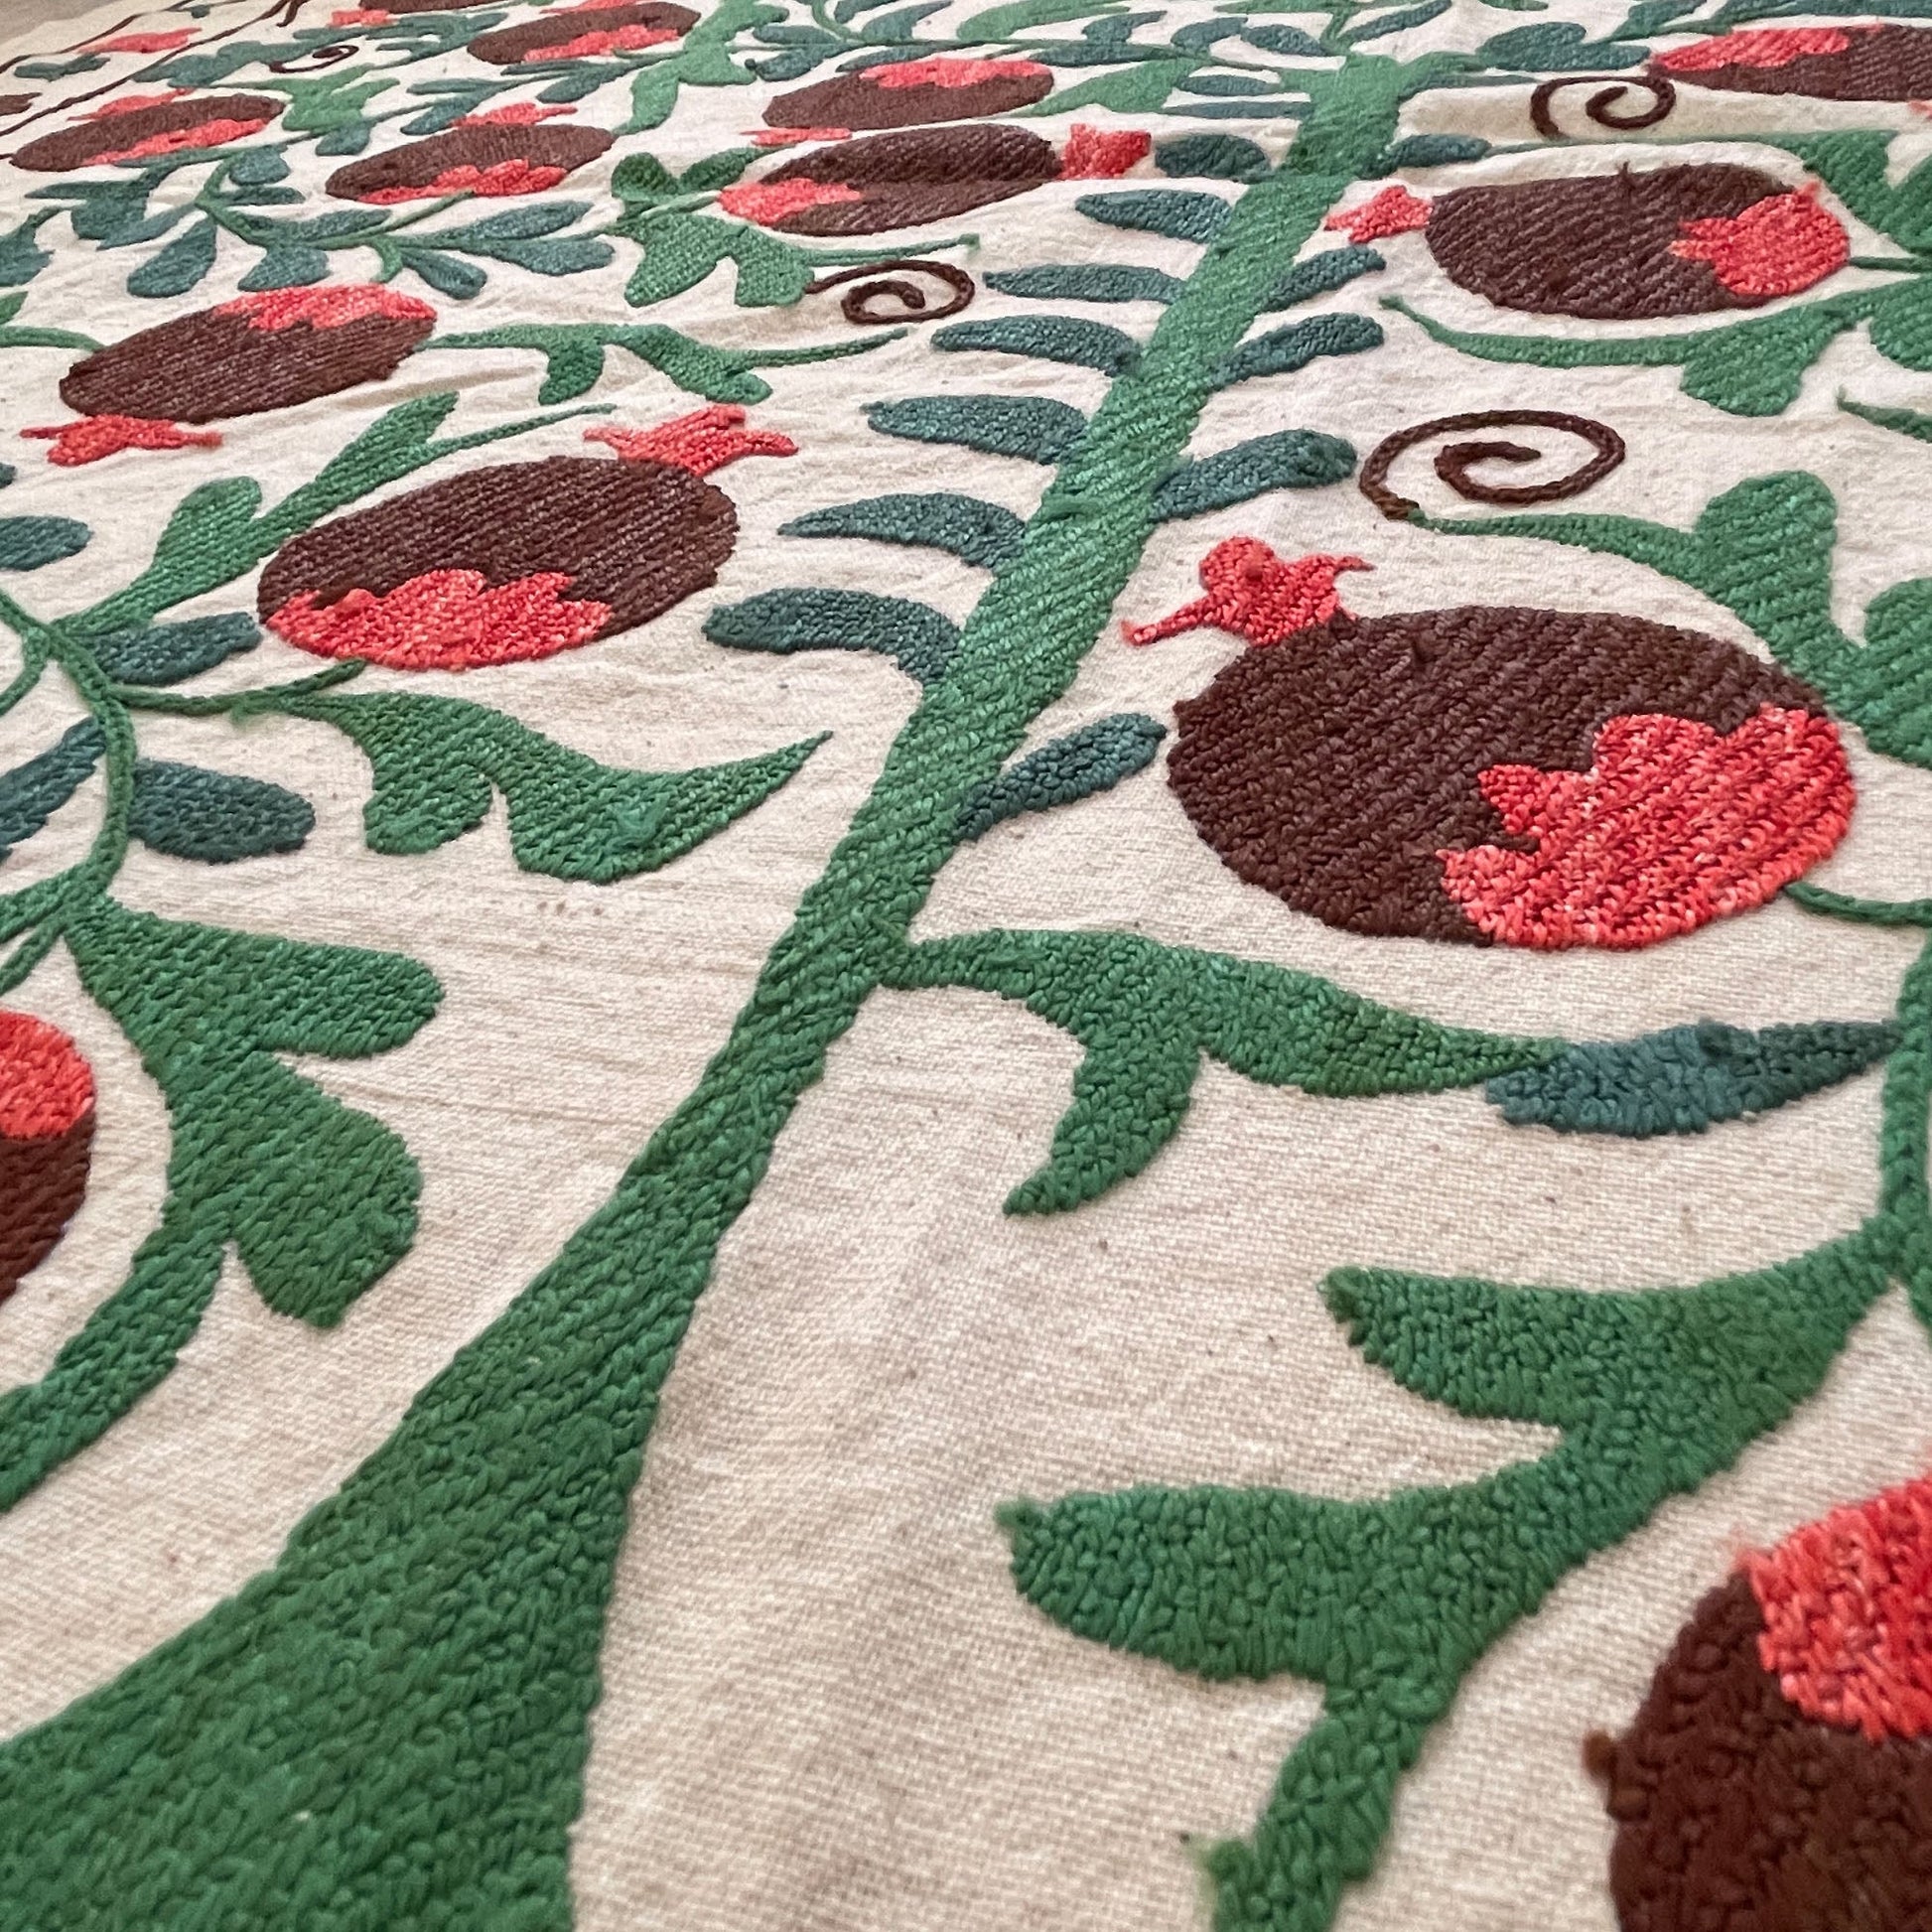 Uzbeki Suzani Hand Embroidered Textile Wall Hanging | Home Décor | Square | 100cm x 100cm SUZ0410005 - Wildash London